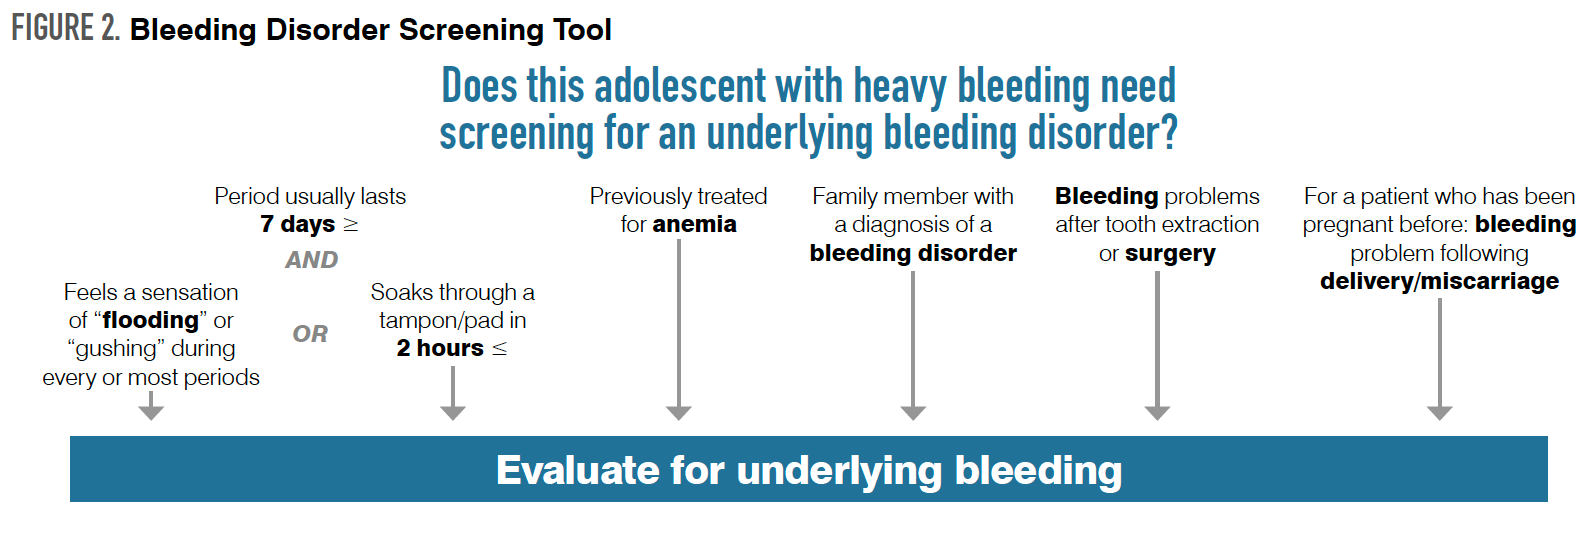 Figure 2. Bleeding Disorder Screening Tool